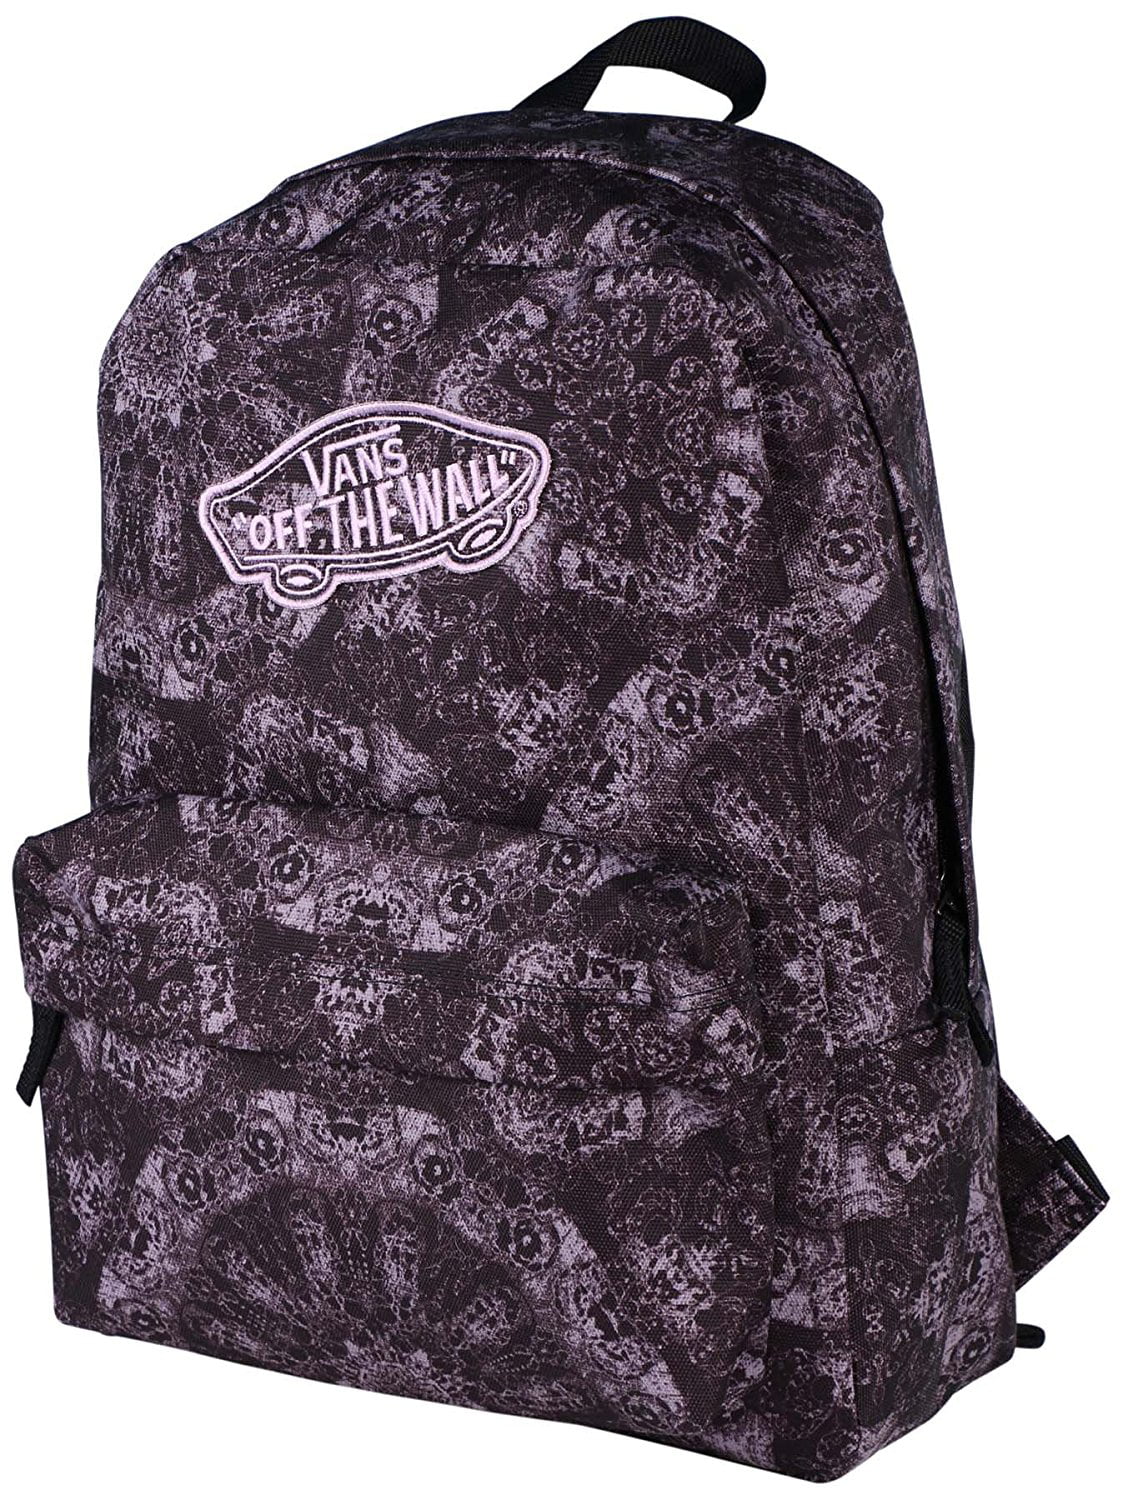 Vans Off The Wall Realm Backpack (Black/Light purple) - Walmart.com